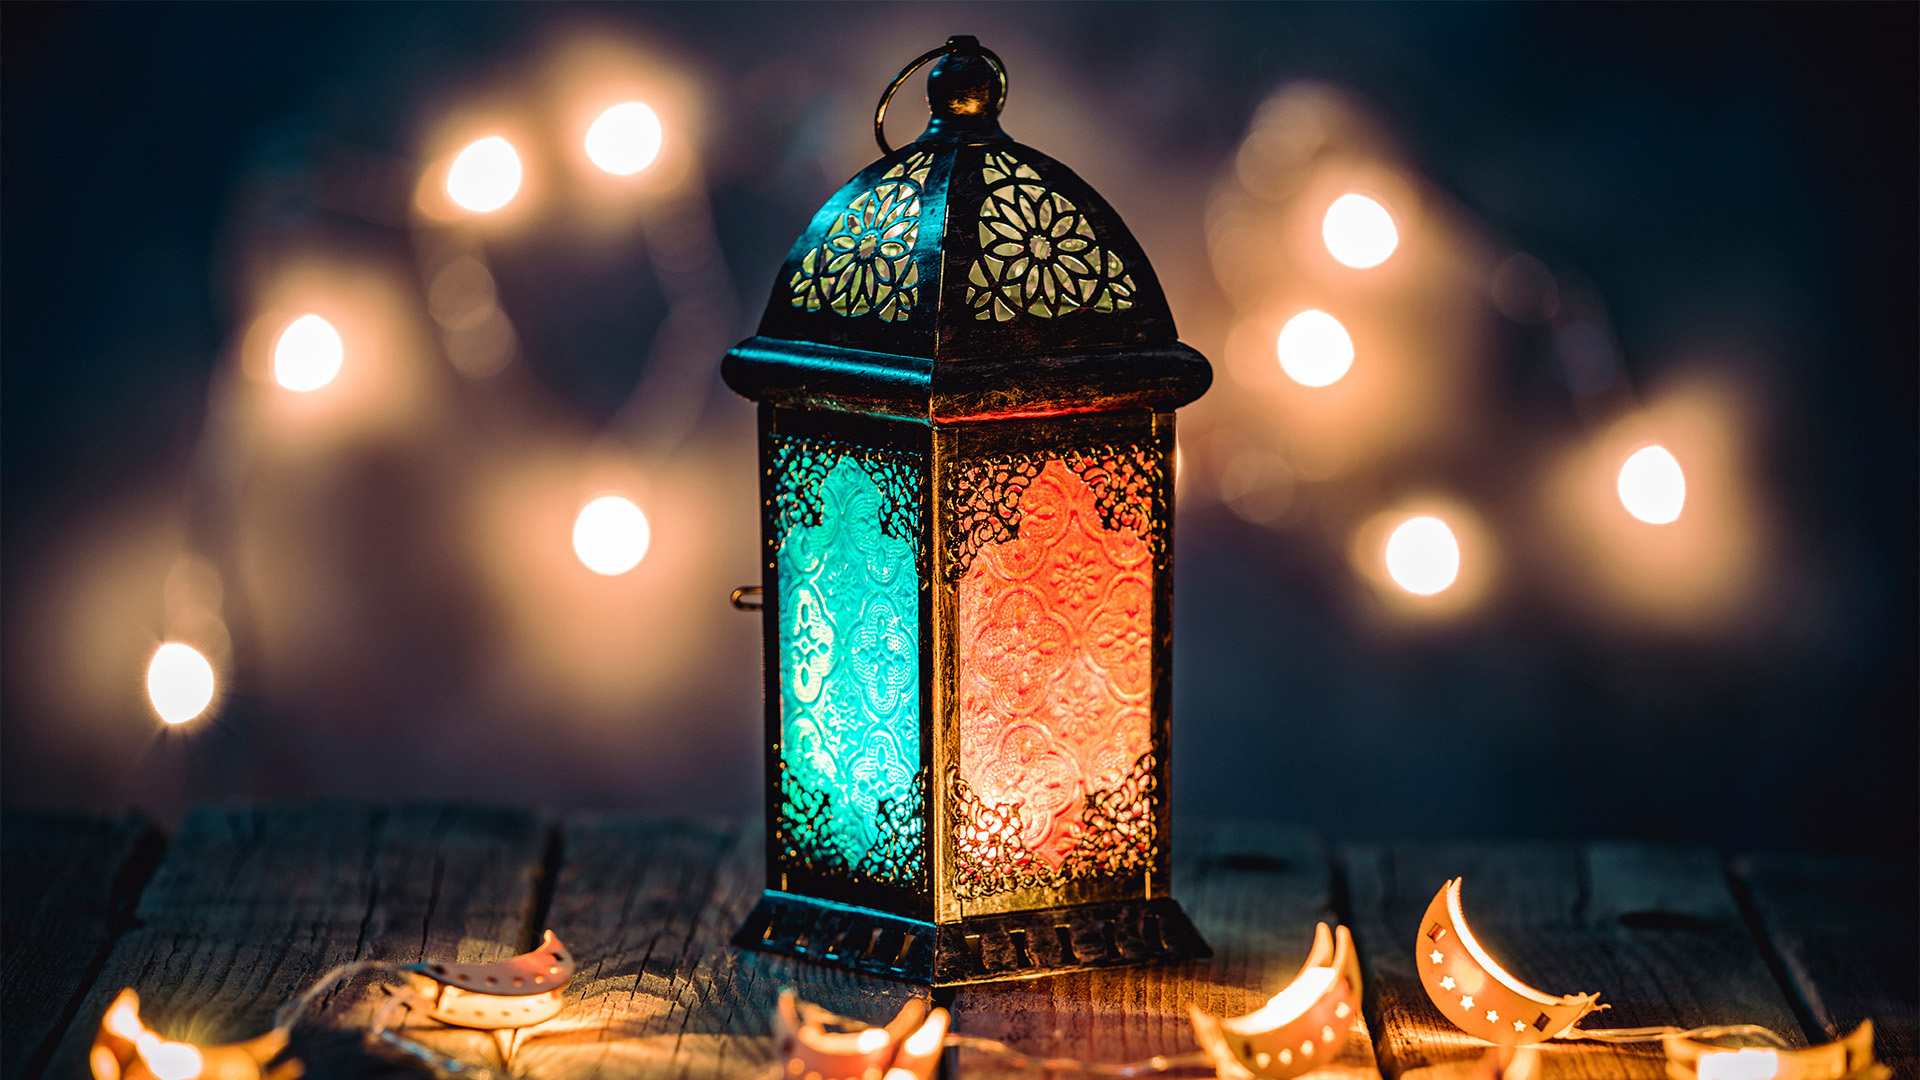 Ramadan Storytime